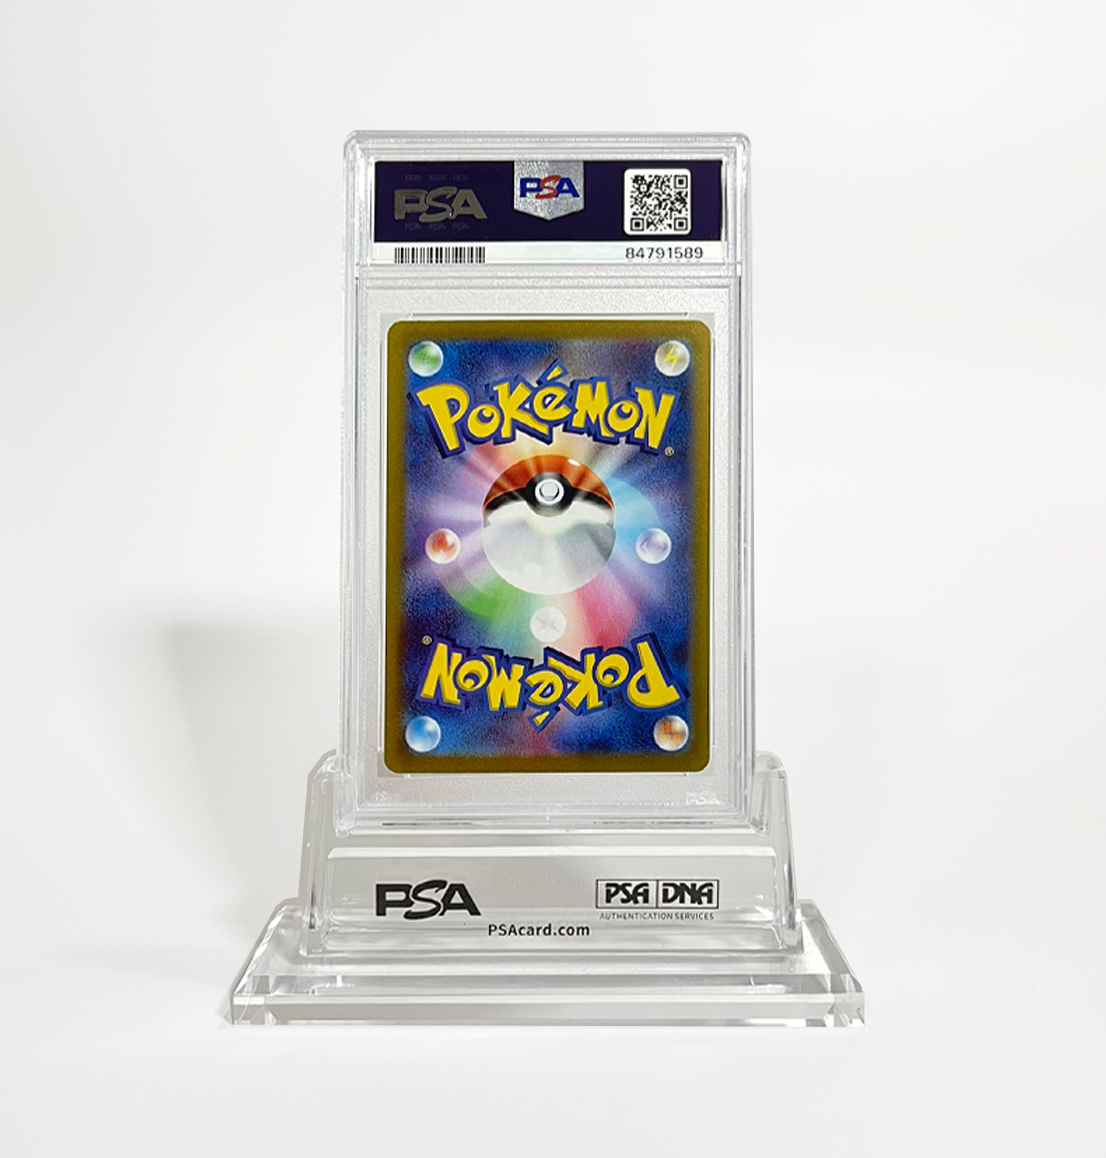 PSA 10 Ting-Lu #097 Clay Burst SV2D Japanese Pokemon card